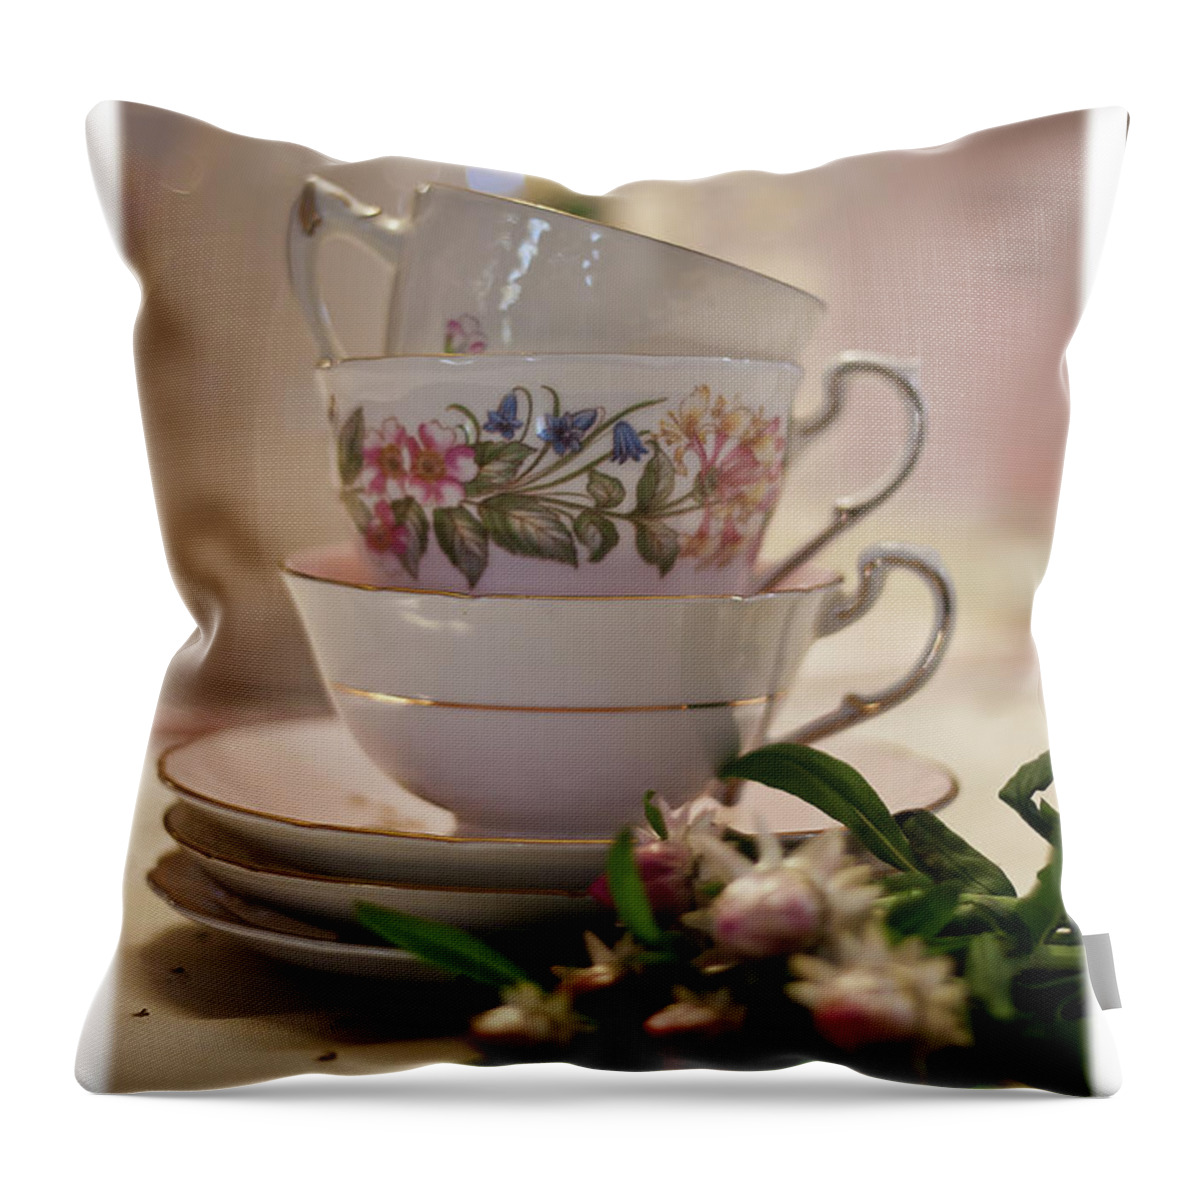 Tea Cup Still Life Throw Pillow featuring the photograph Tea Cups Still Life by Sandra Foster